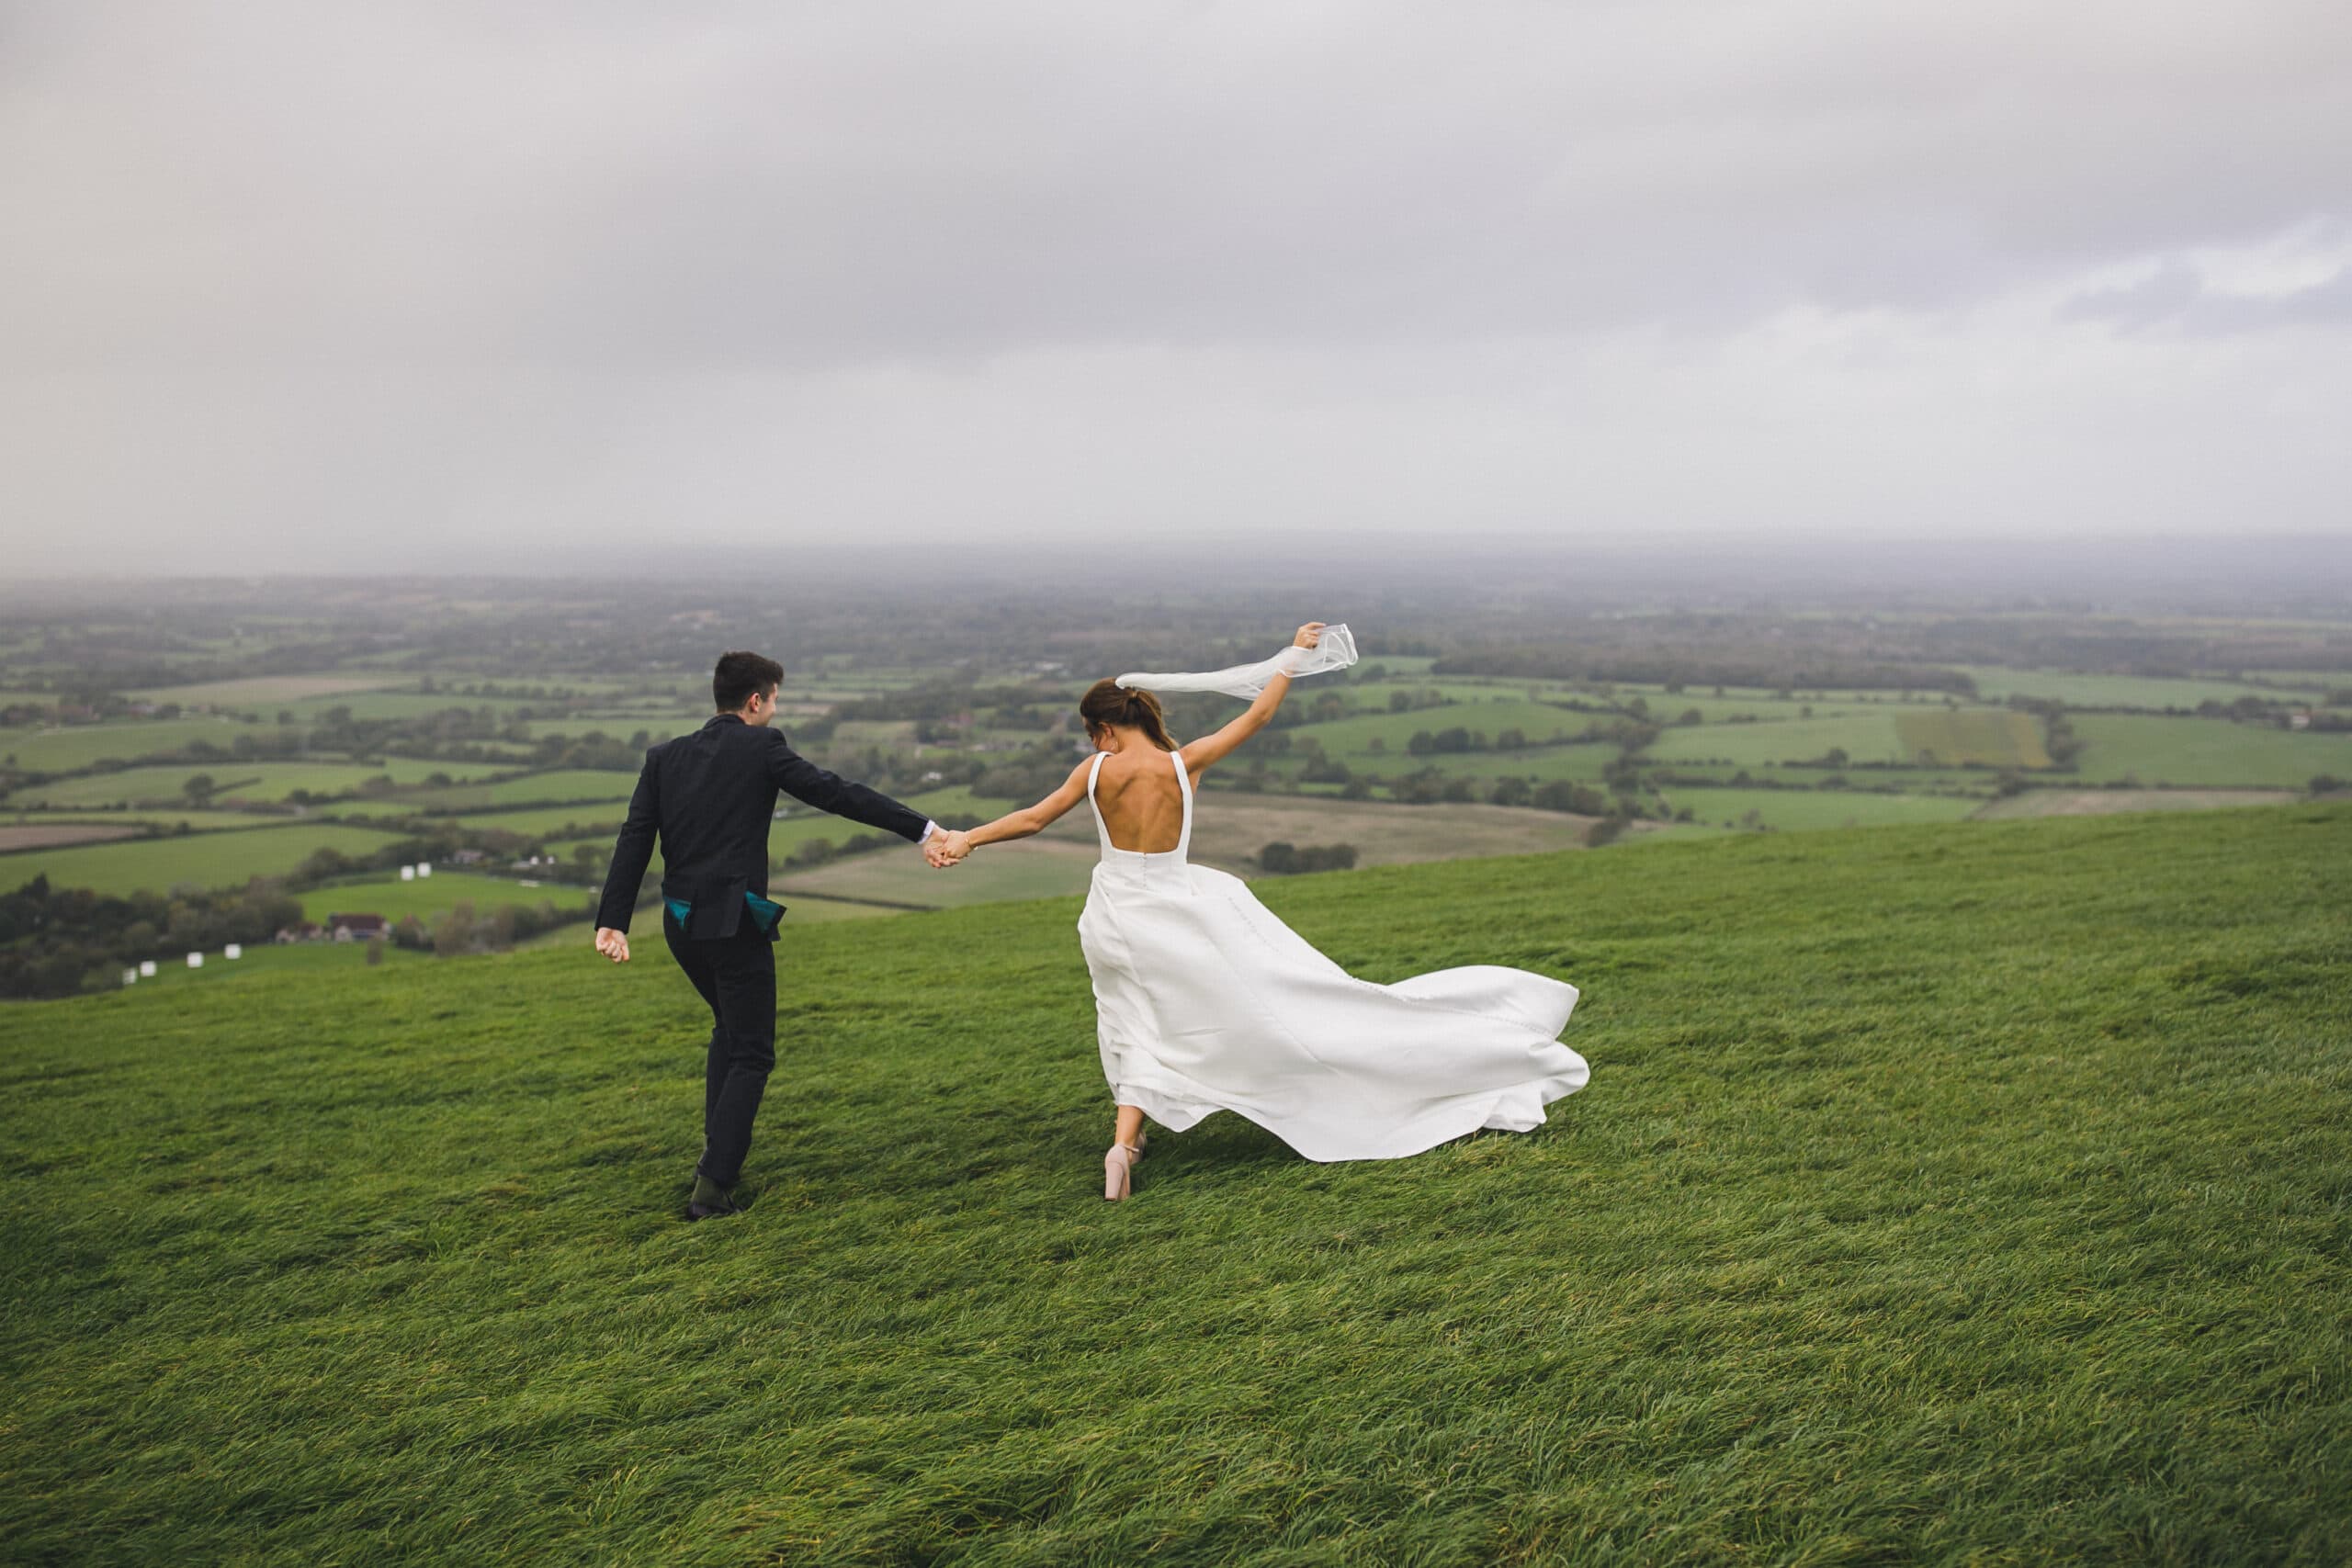 A bride and groom joyfully running on a grassy hill in Brighton